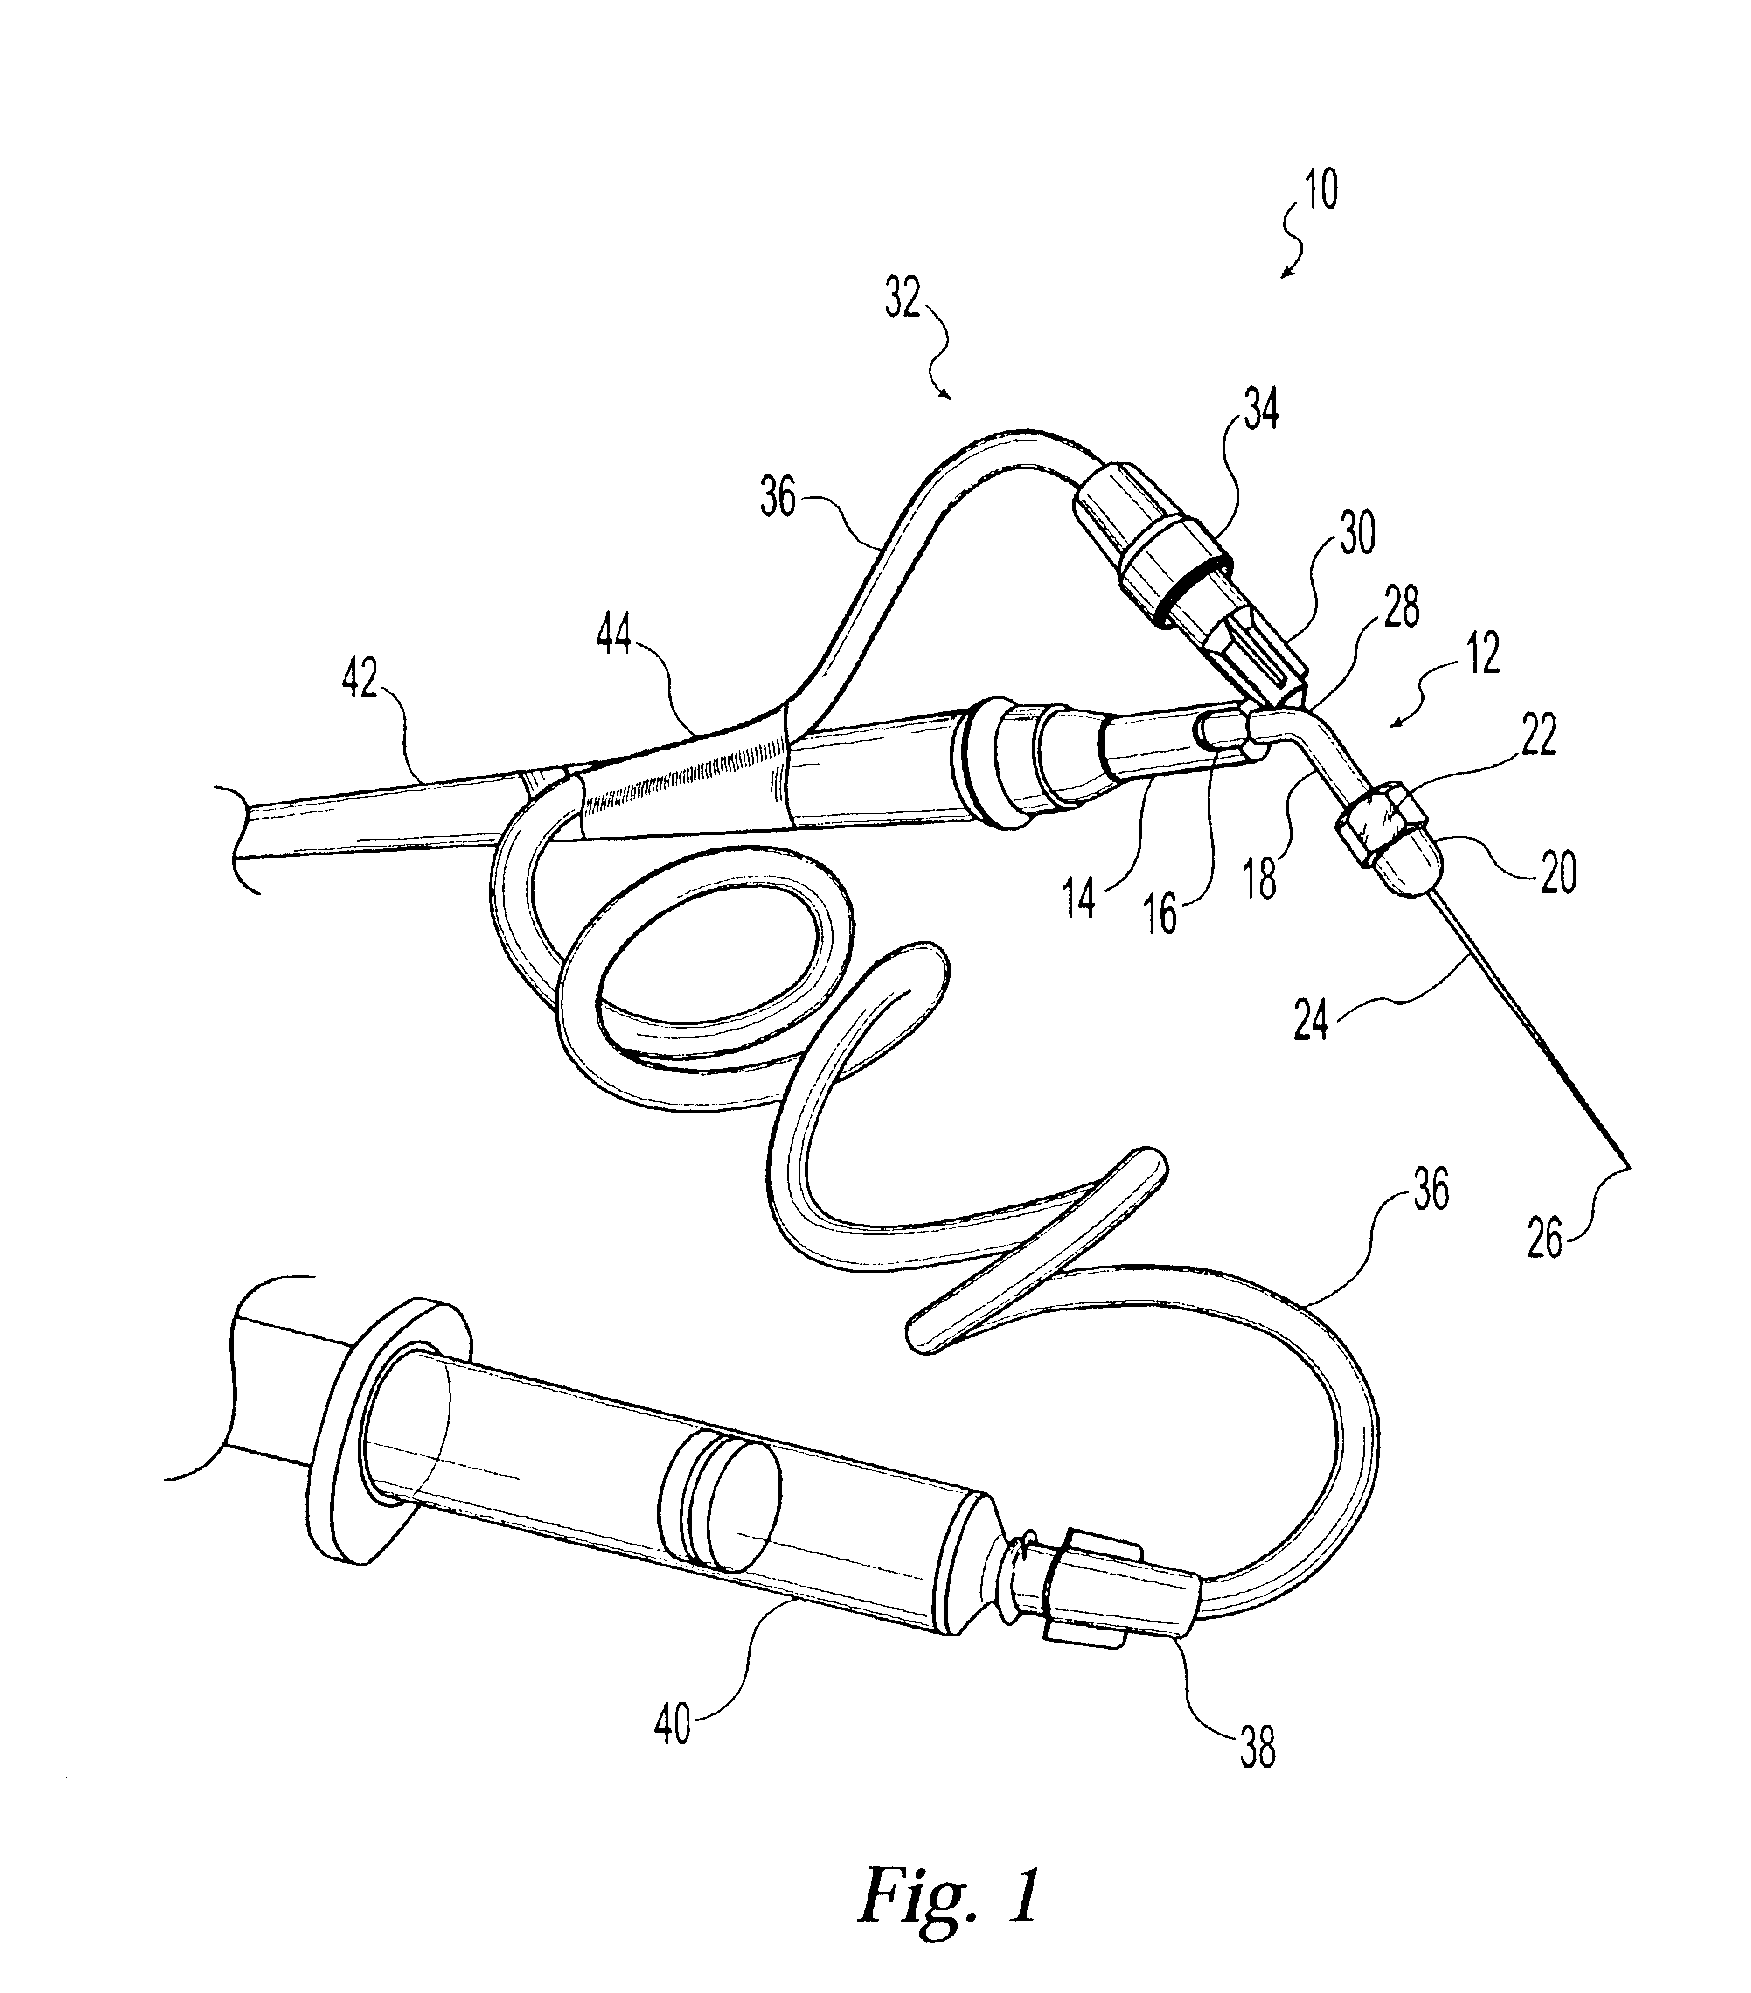 Ultrasonic dental device